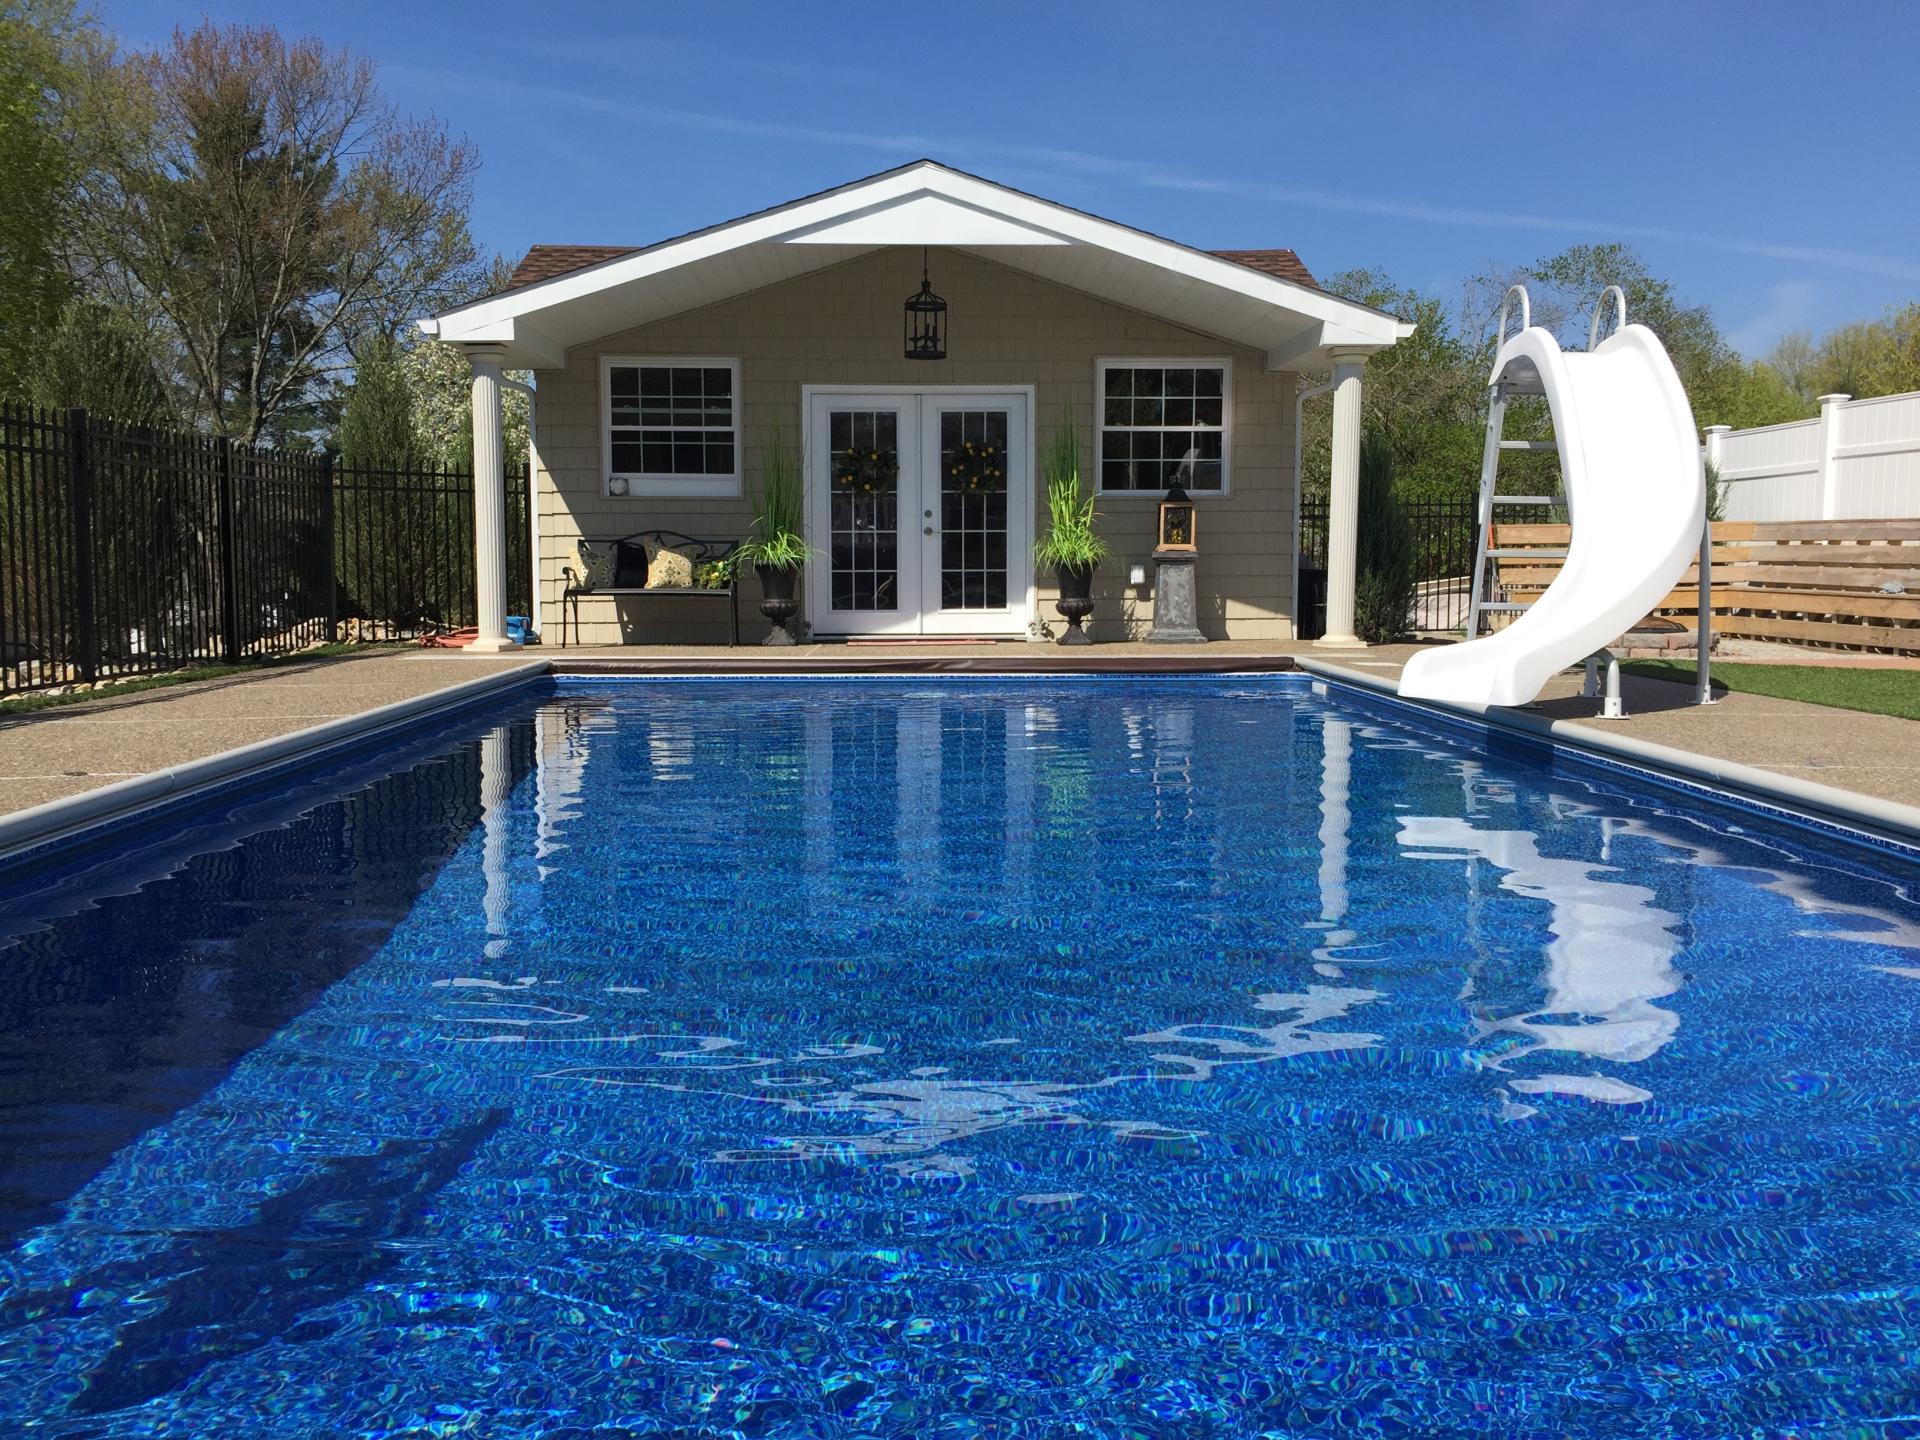 house-with-a-pool.jpg